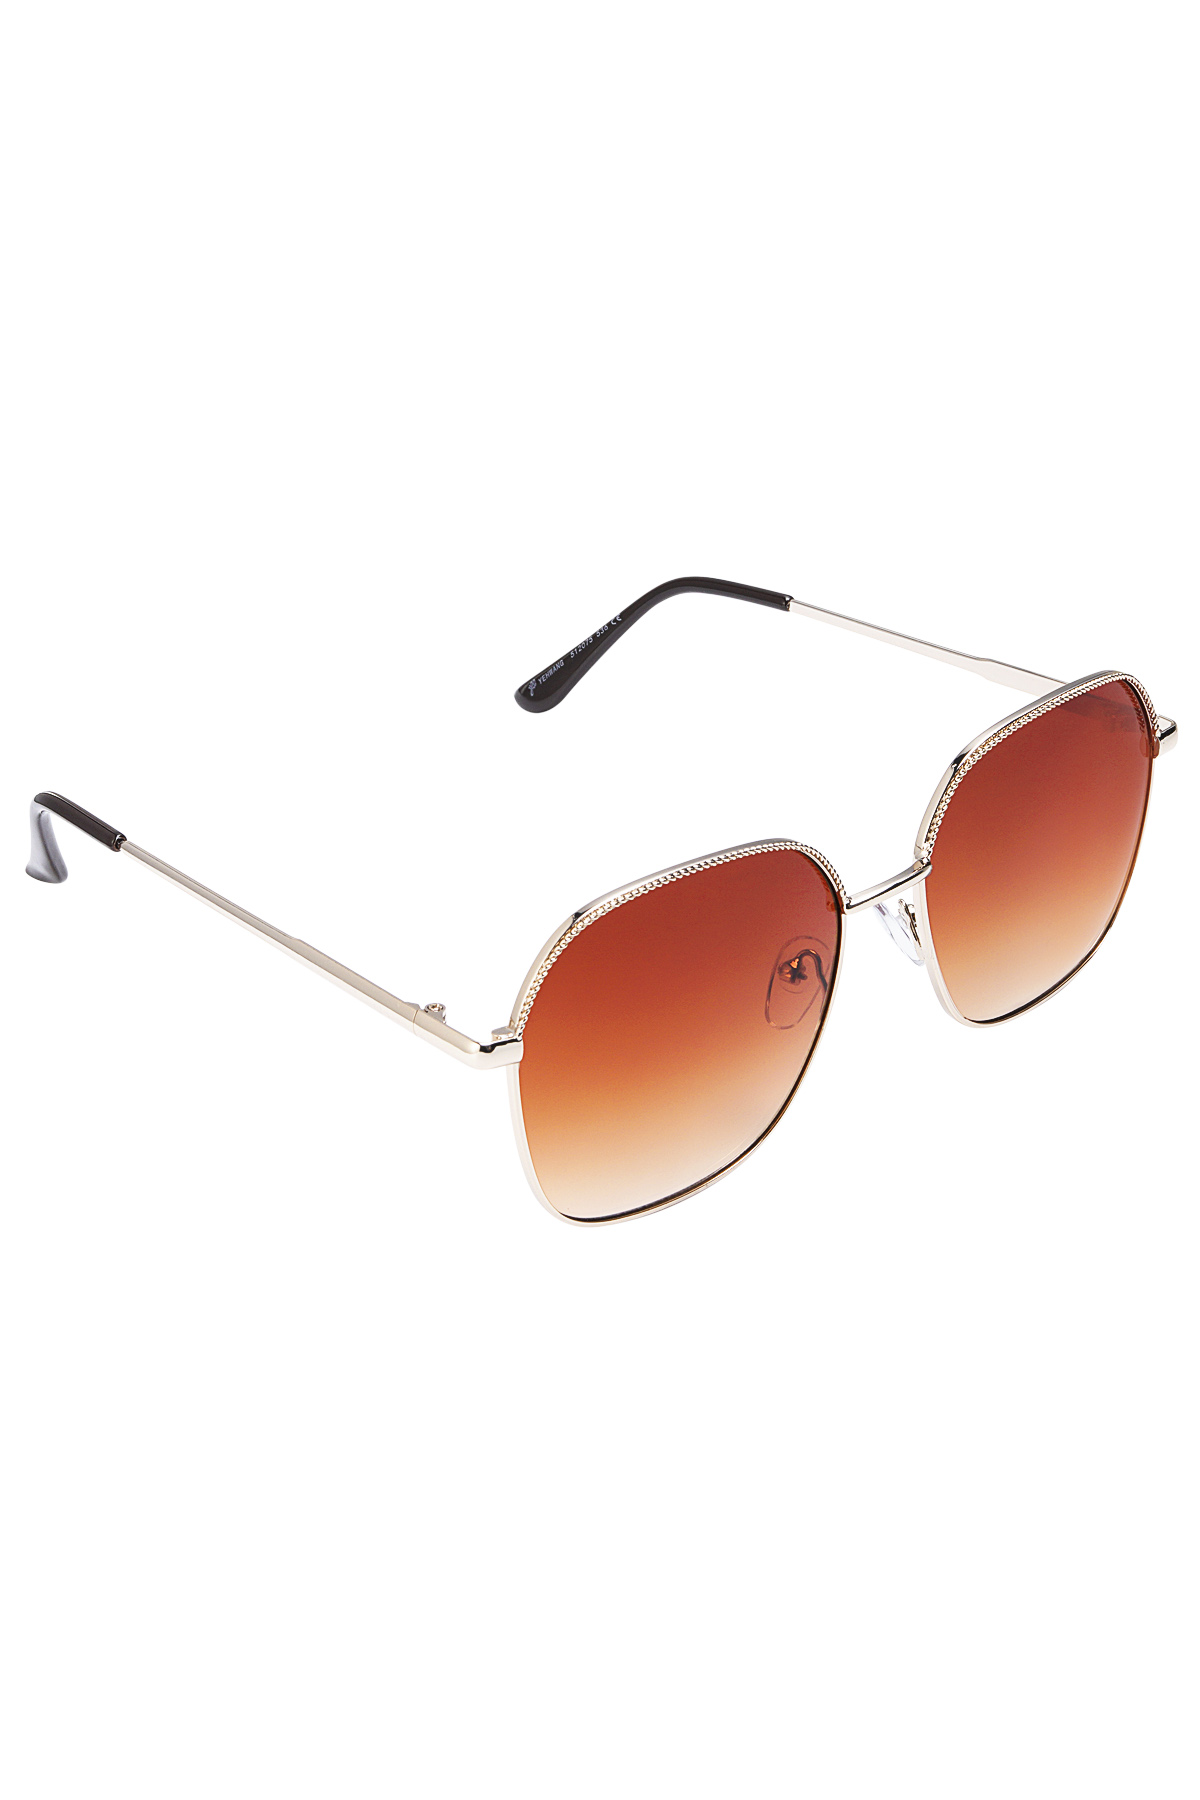 Casual sunglasses - brown